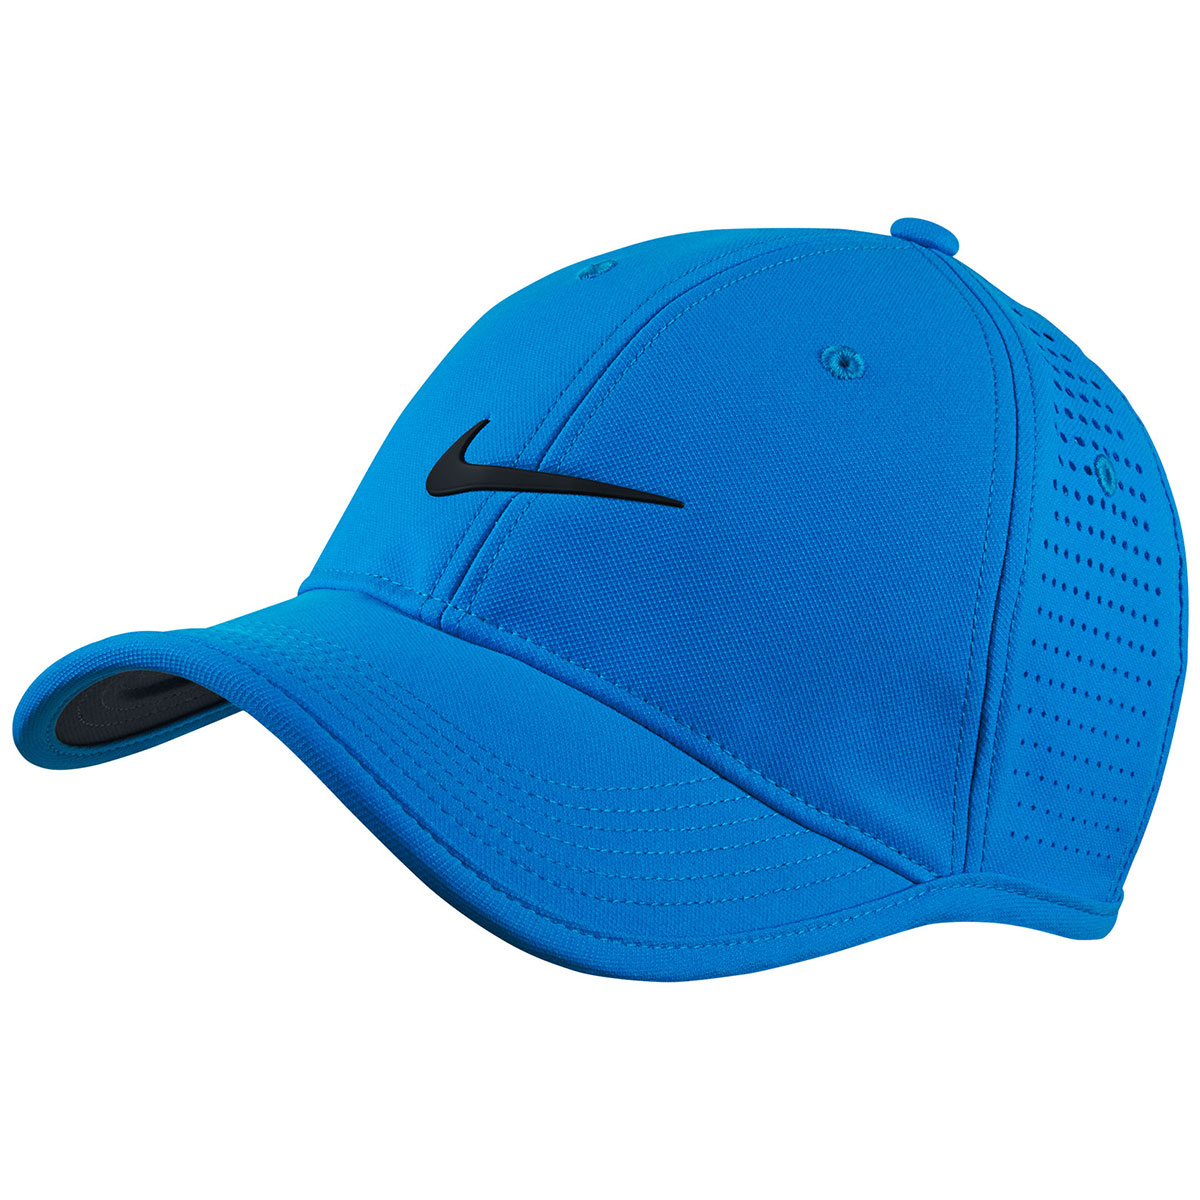 Nike Golf Cap Ultralight Tour Perforated Cap | Online Golf